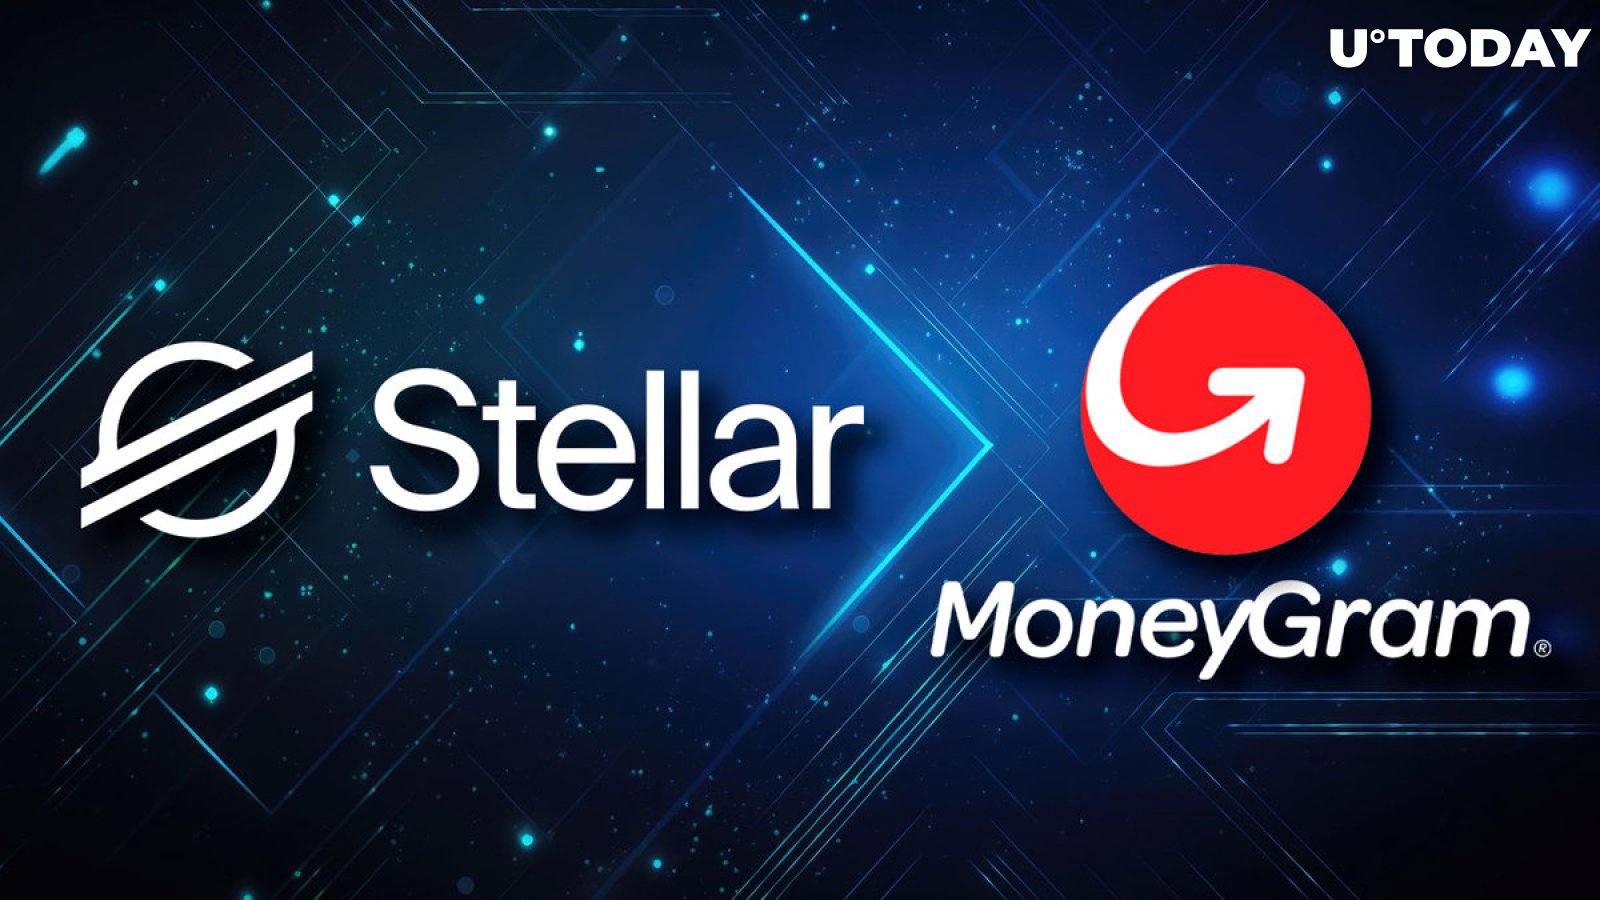 Stellar (XLM) Foundation Announces MoneyGram Investment